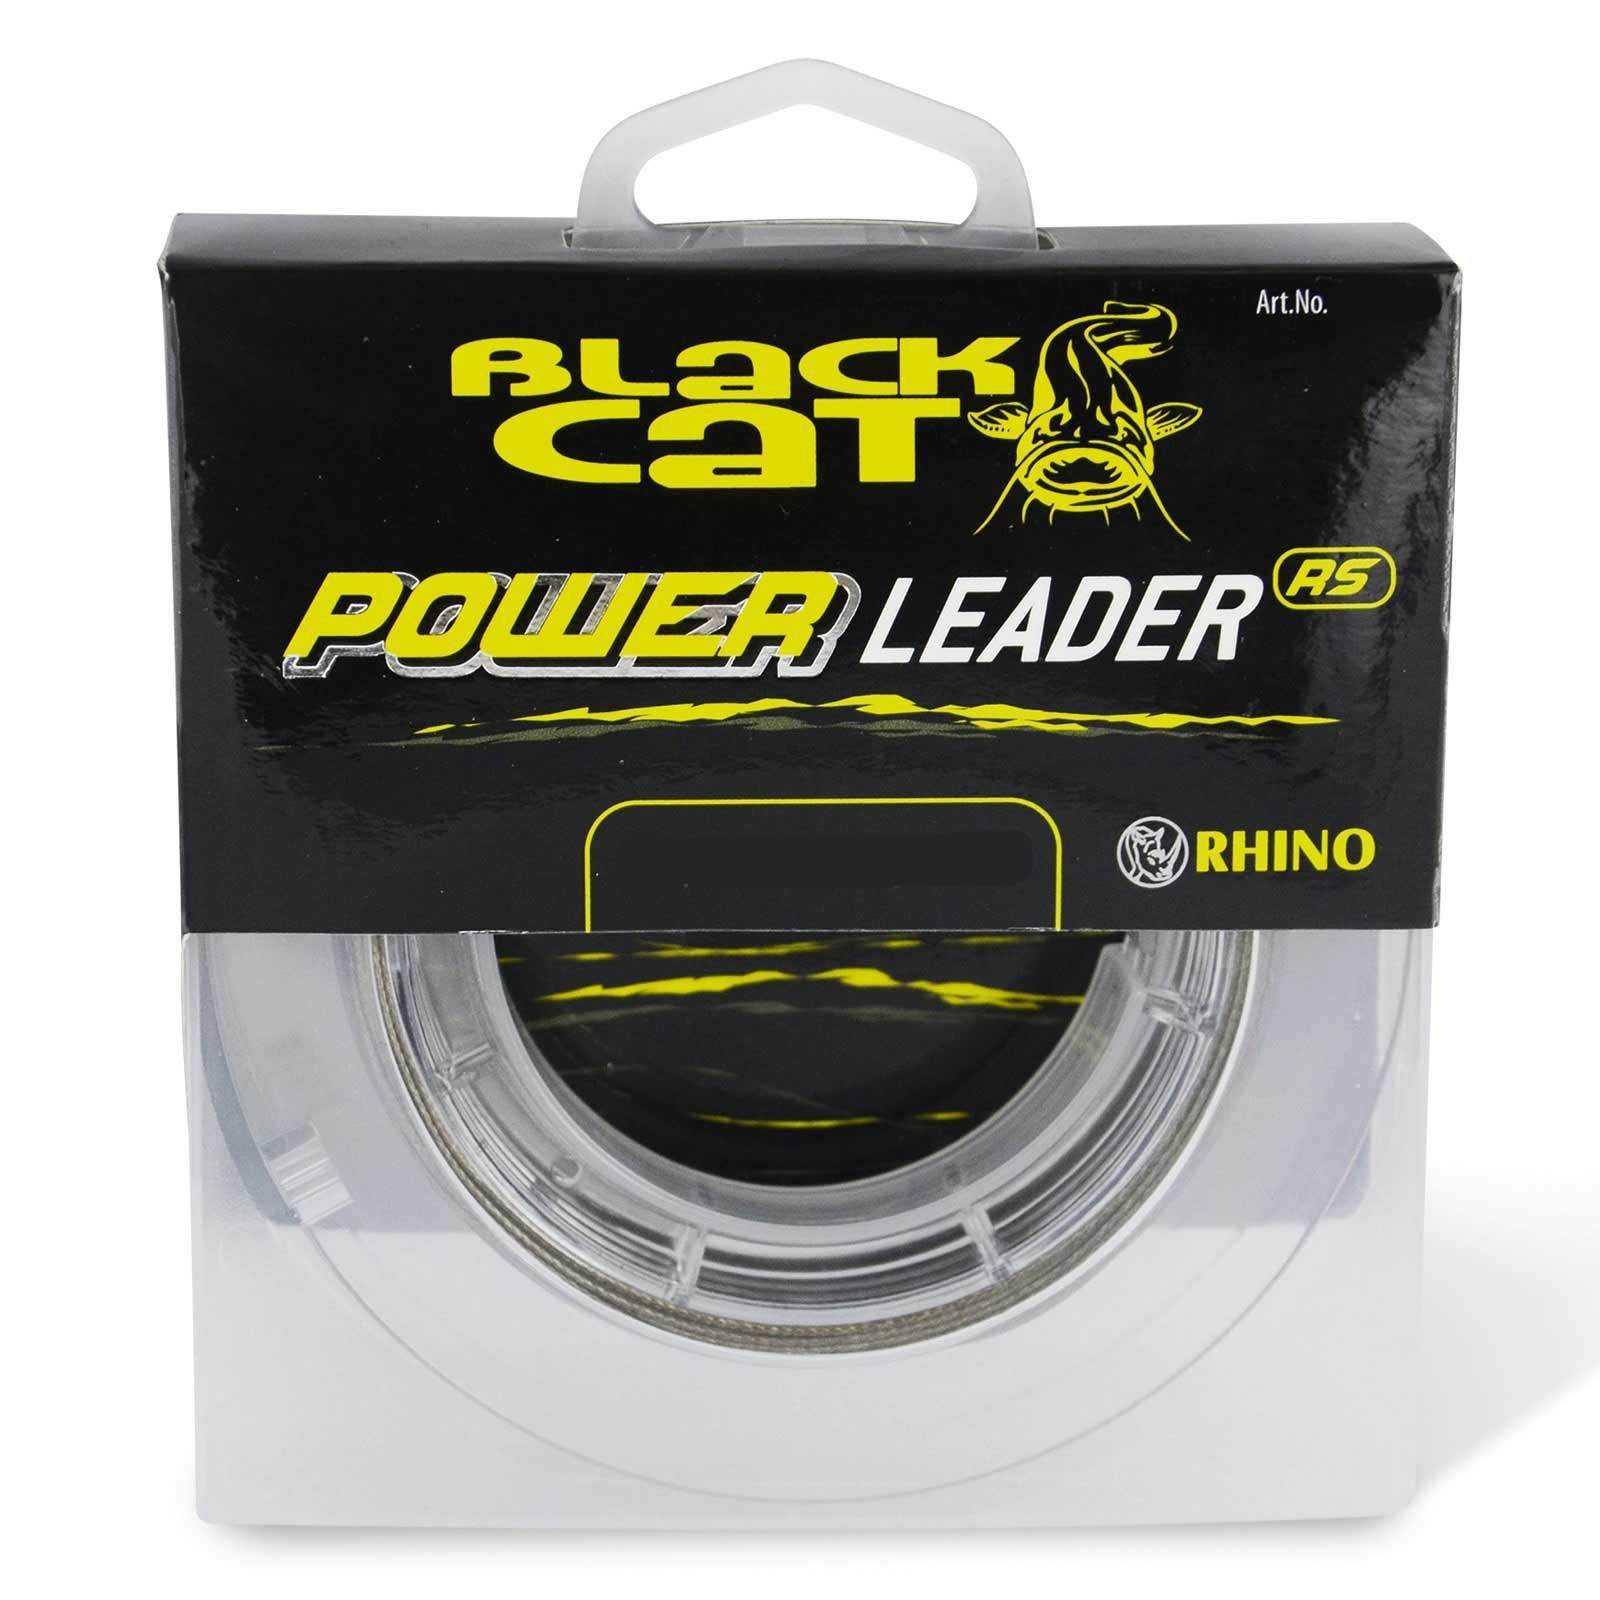 Angelschnur, Cat Black Leader 50kg Black Power Cat 20m Rhino RS